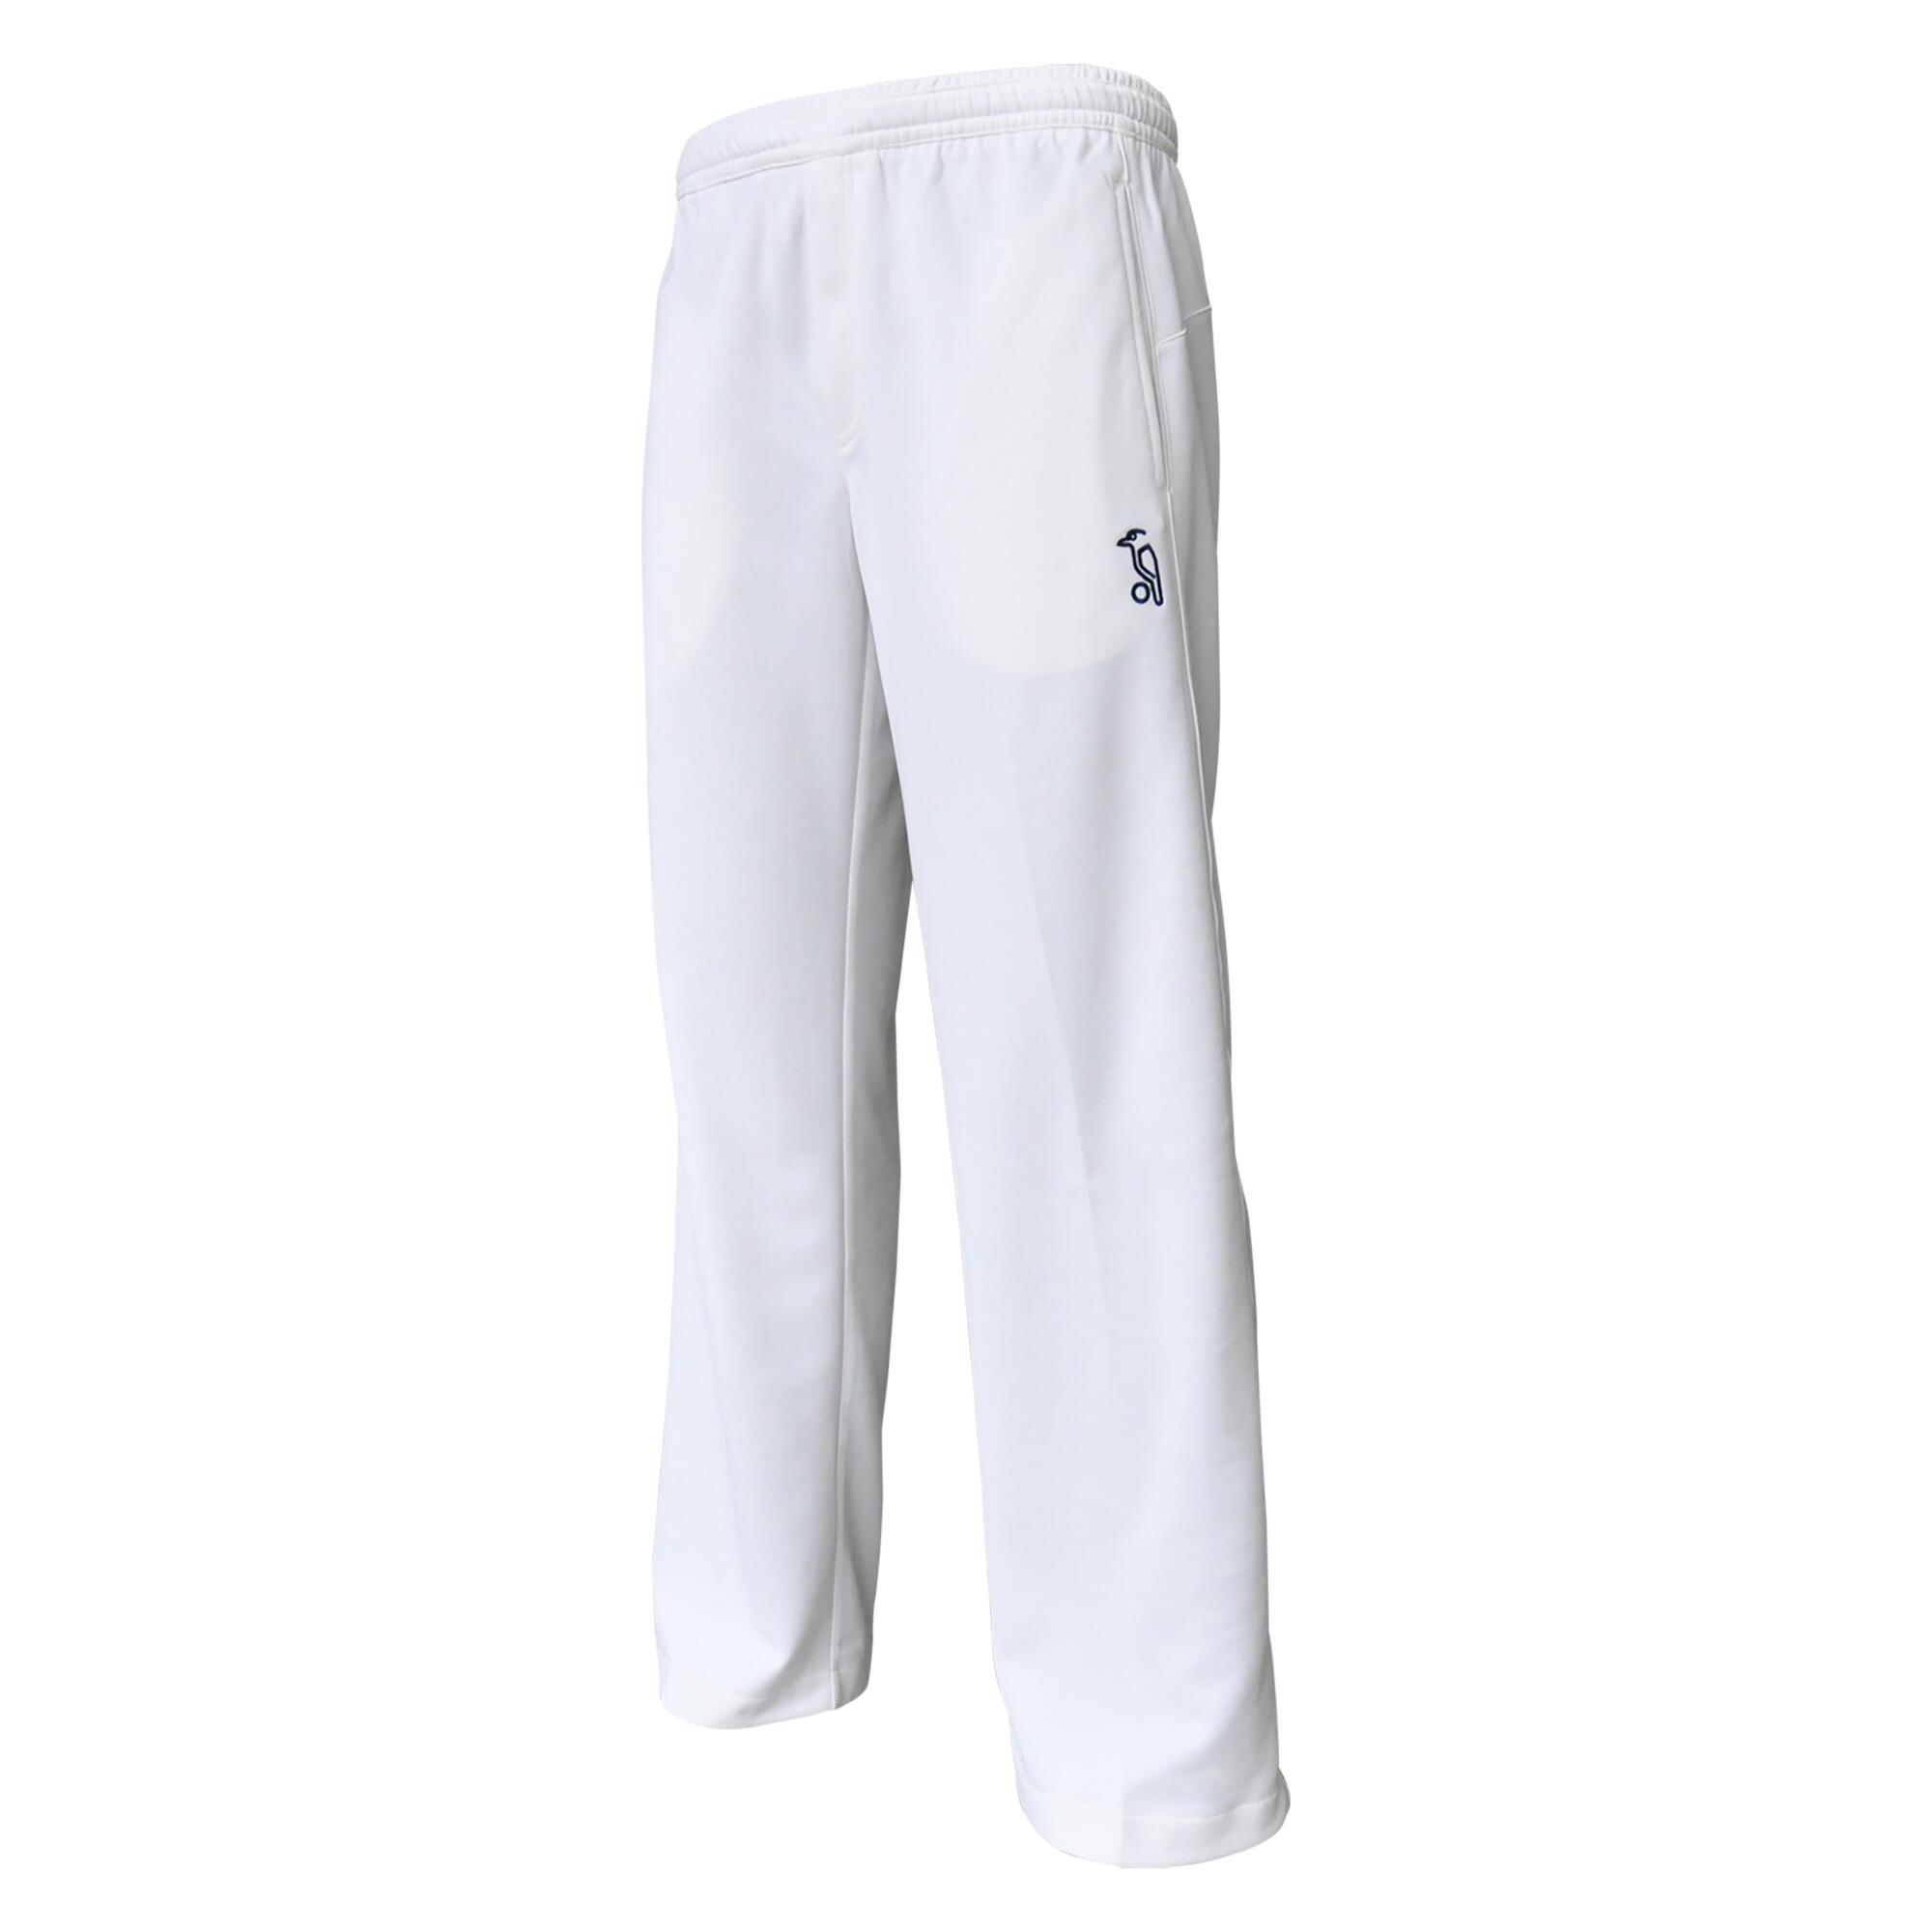 Kookaburra Pro Player Junior Cricket Pants White 1/2